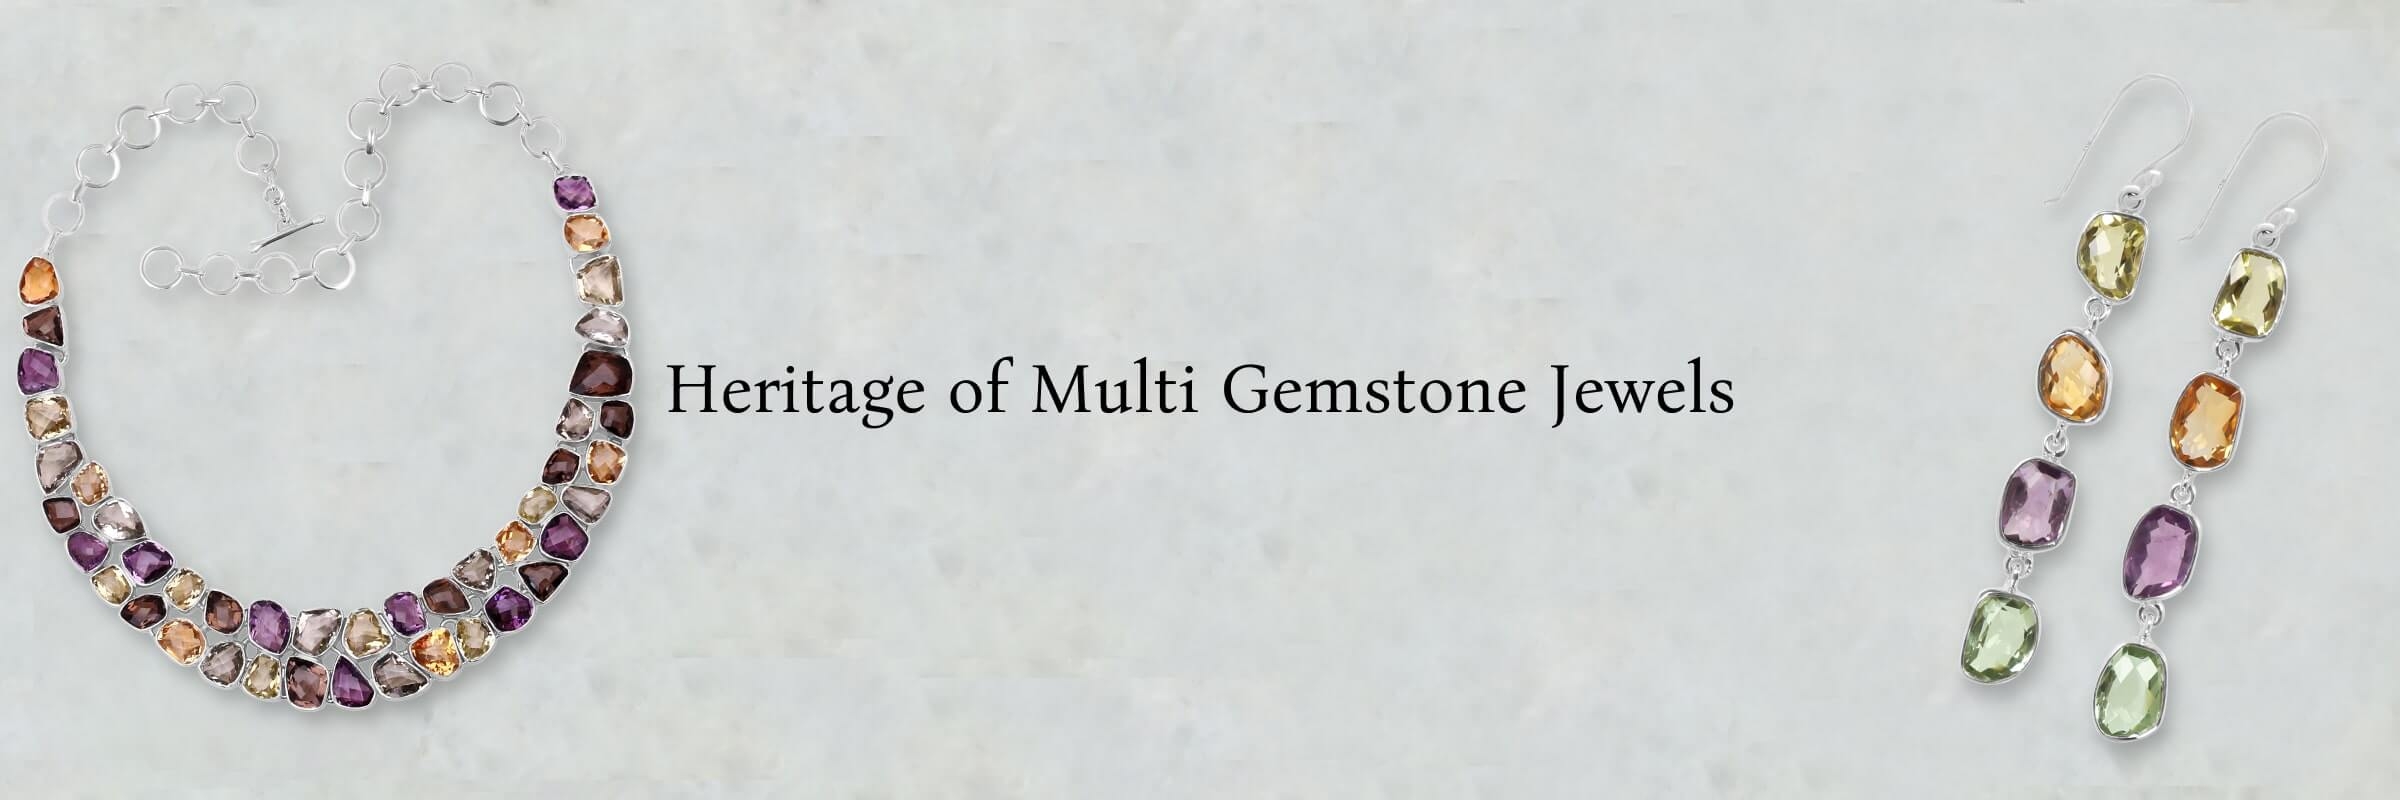 History of Multi Gemstone Jewelry